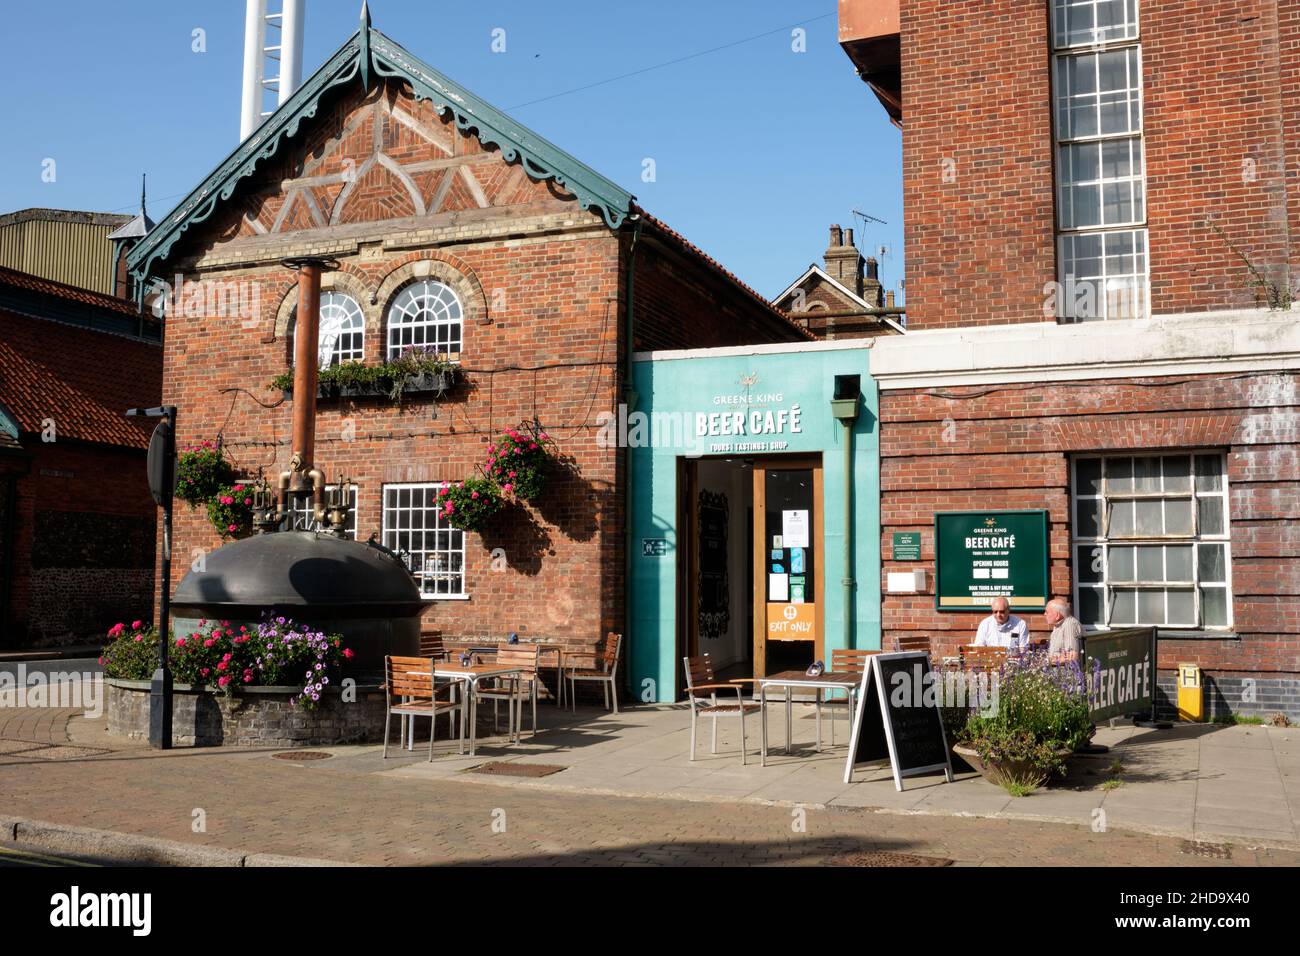 Greene King Beer Cafe Bury St Edmunds Stock Photo